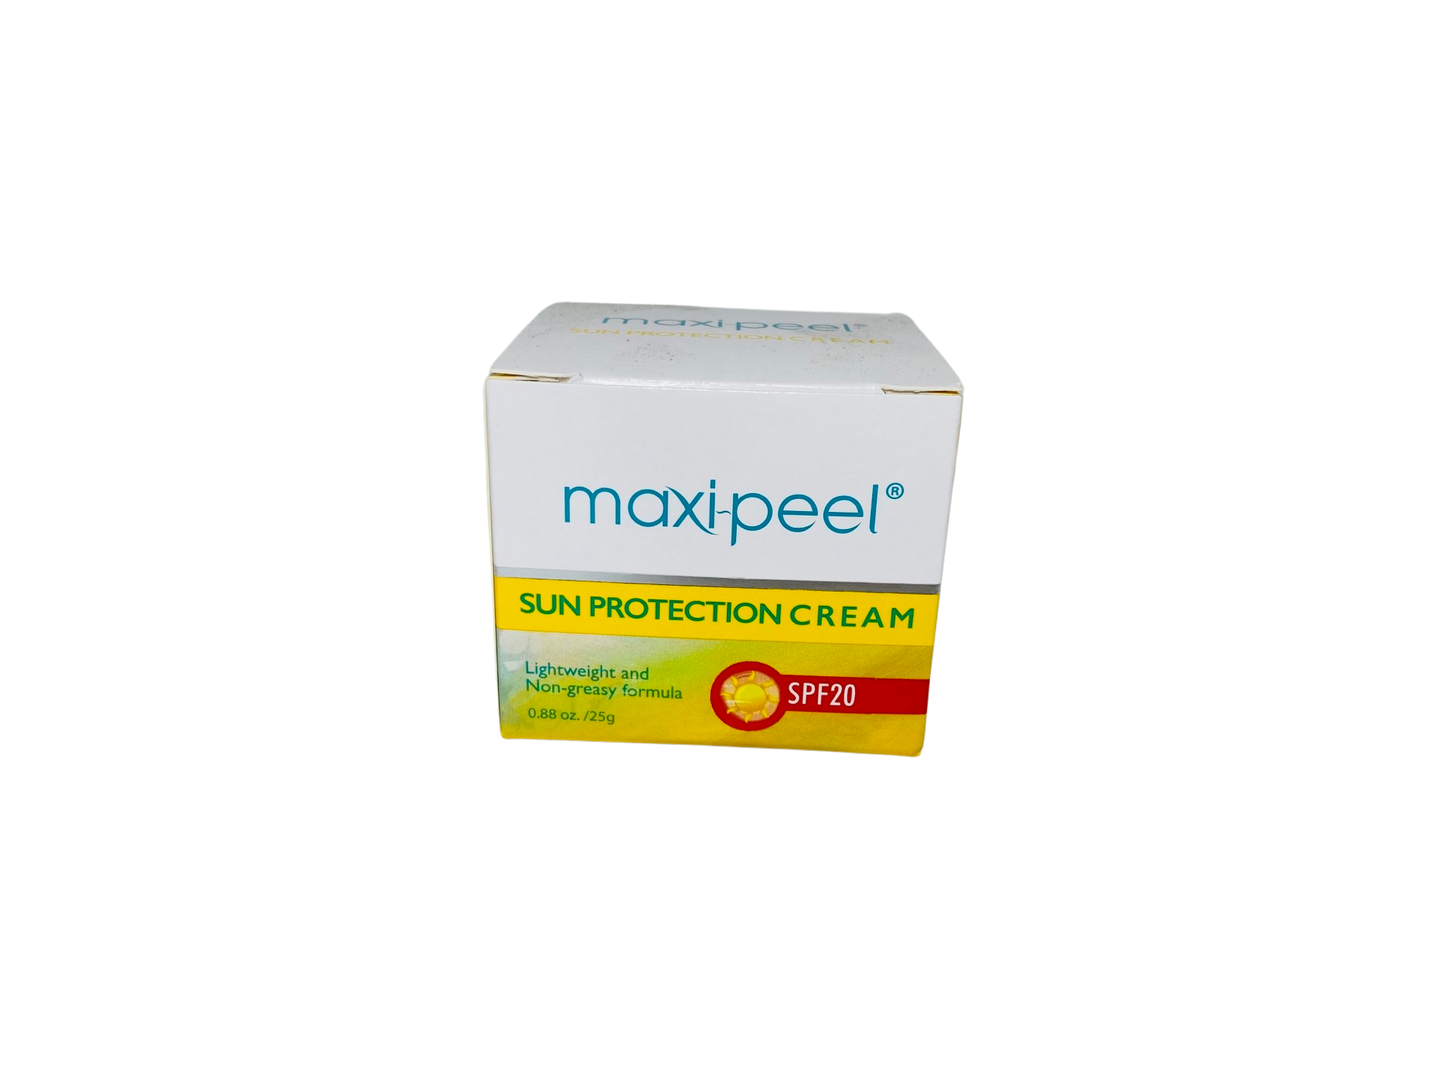 Maxi-peel Sun Protection Cream 25g